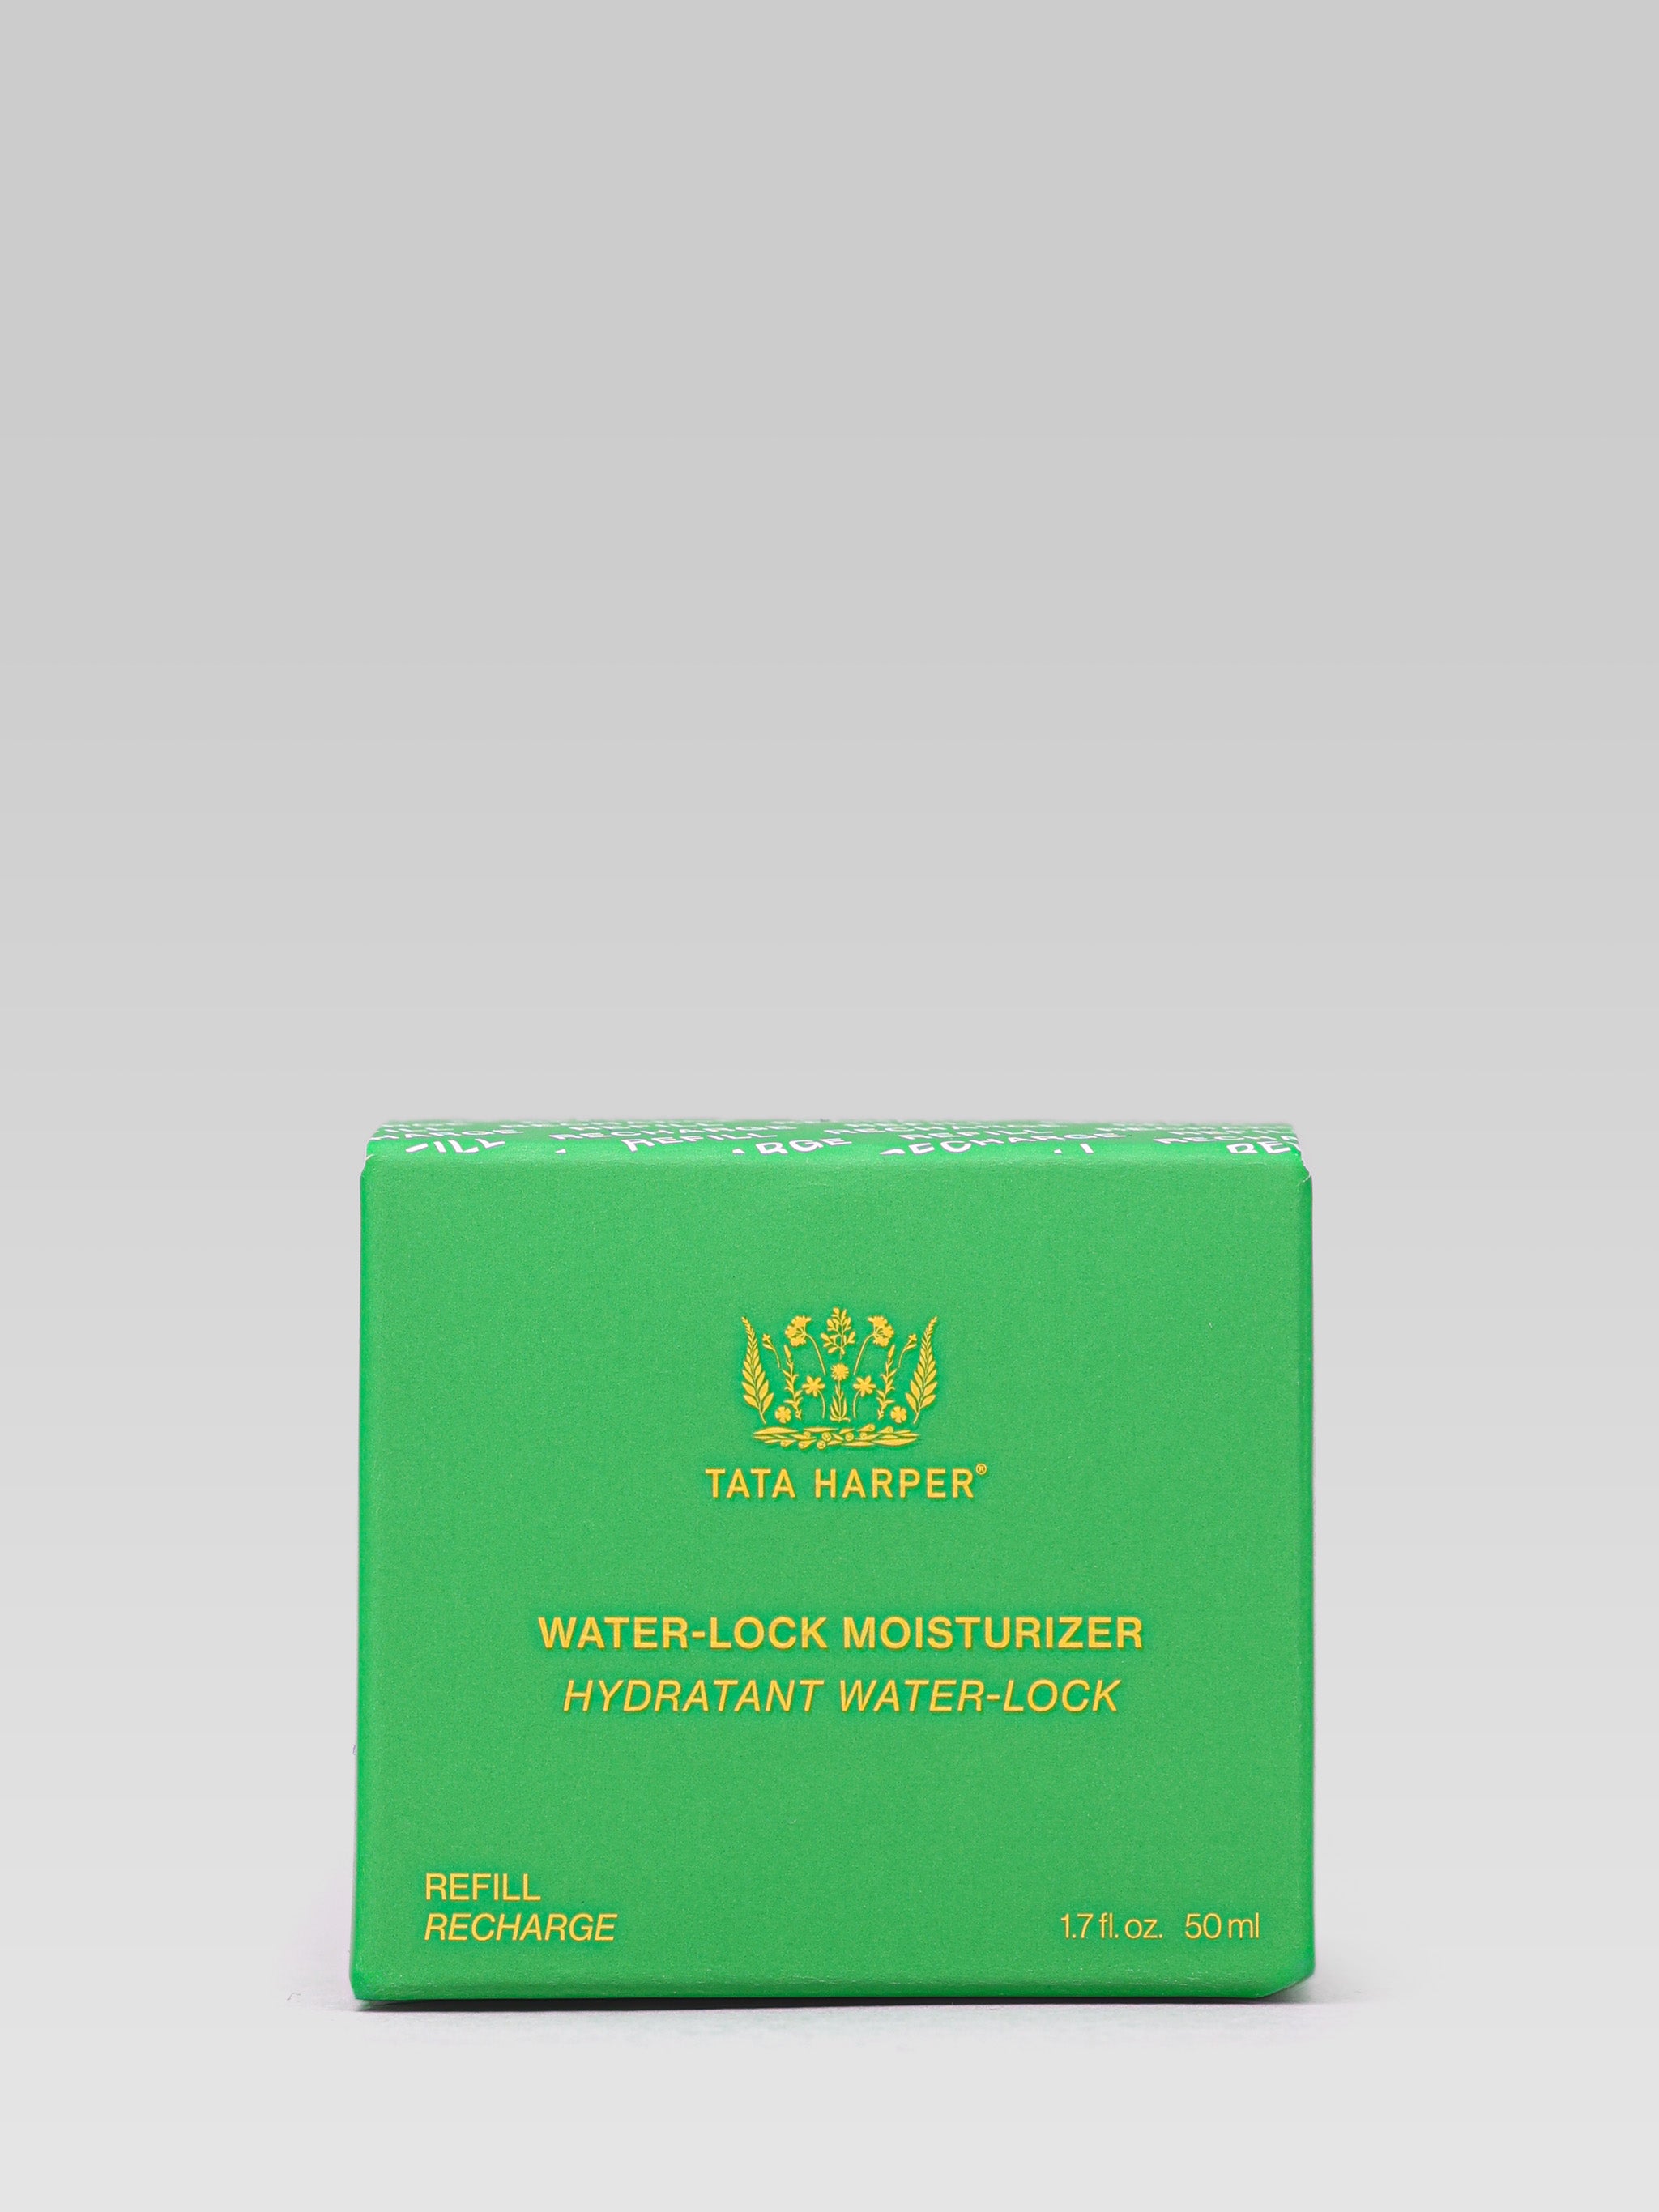 Tata Harper Waterlock Moisturizer Refill product packaging